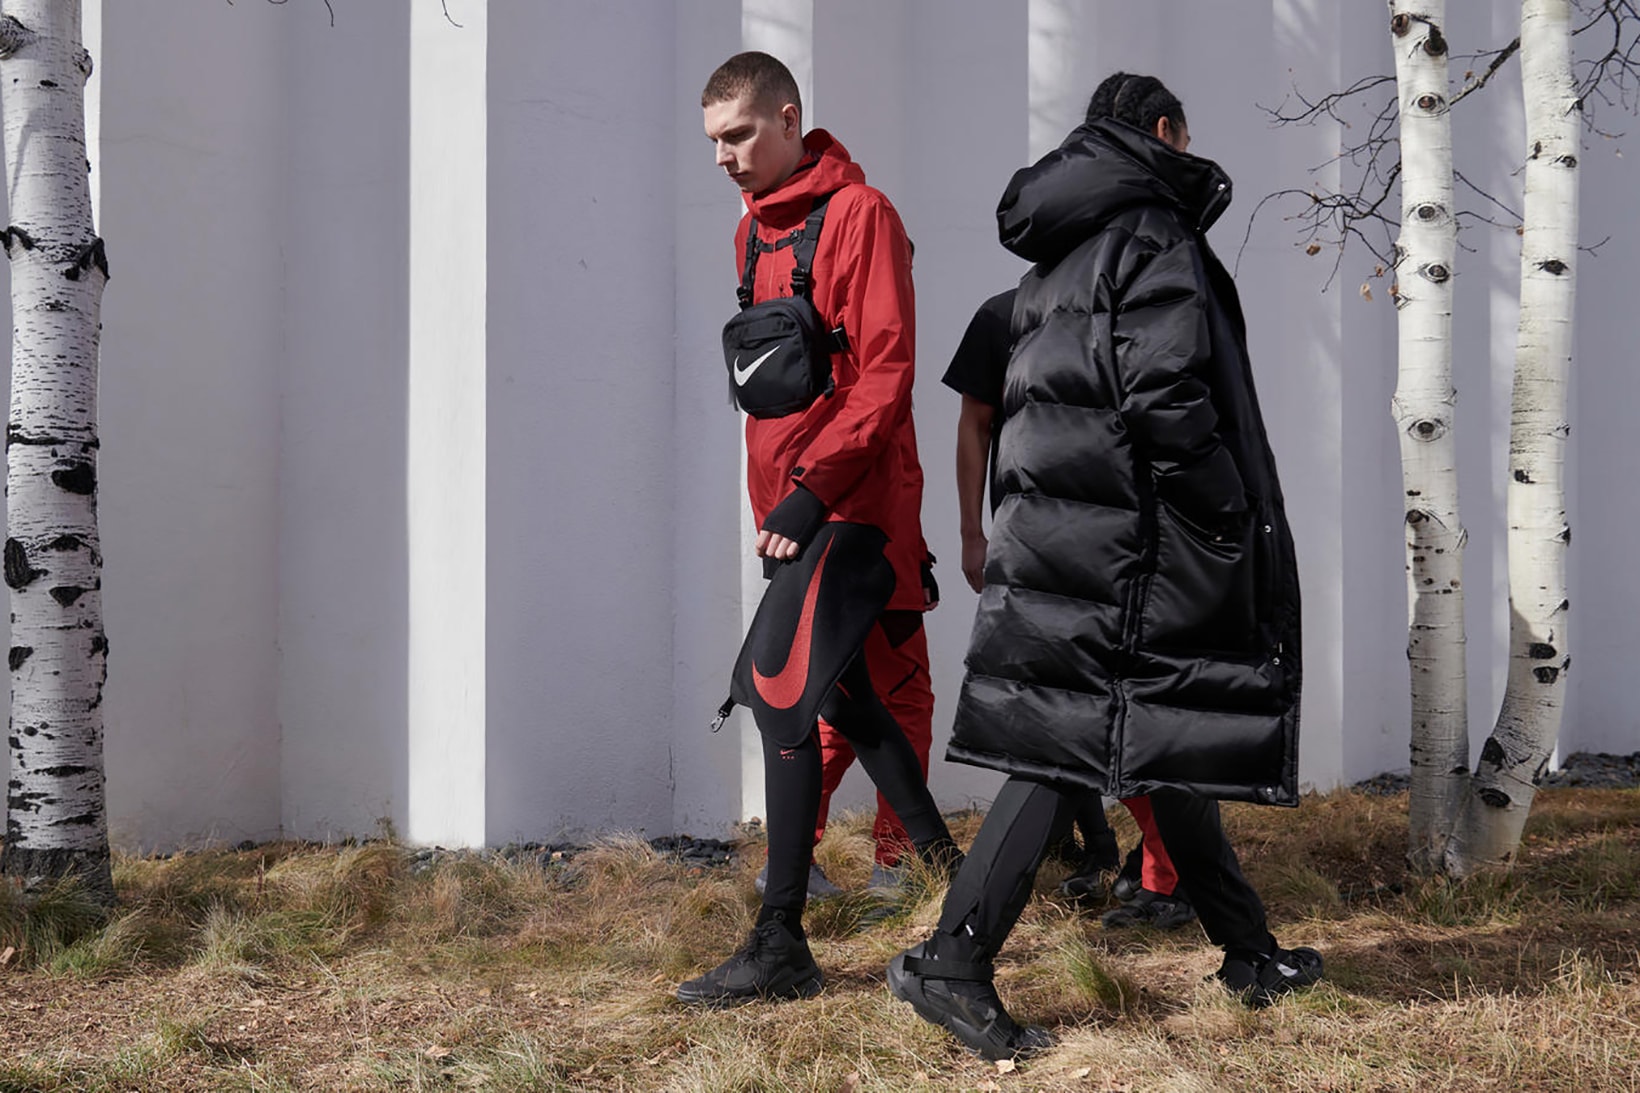 nike matthew m williams series 003 collaboration jackets bags red sportswear joyride cc3 setter black silver